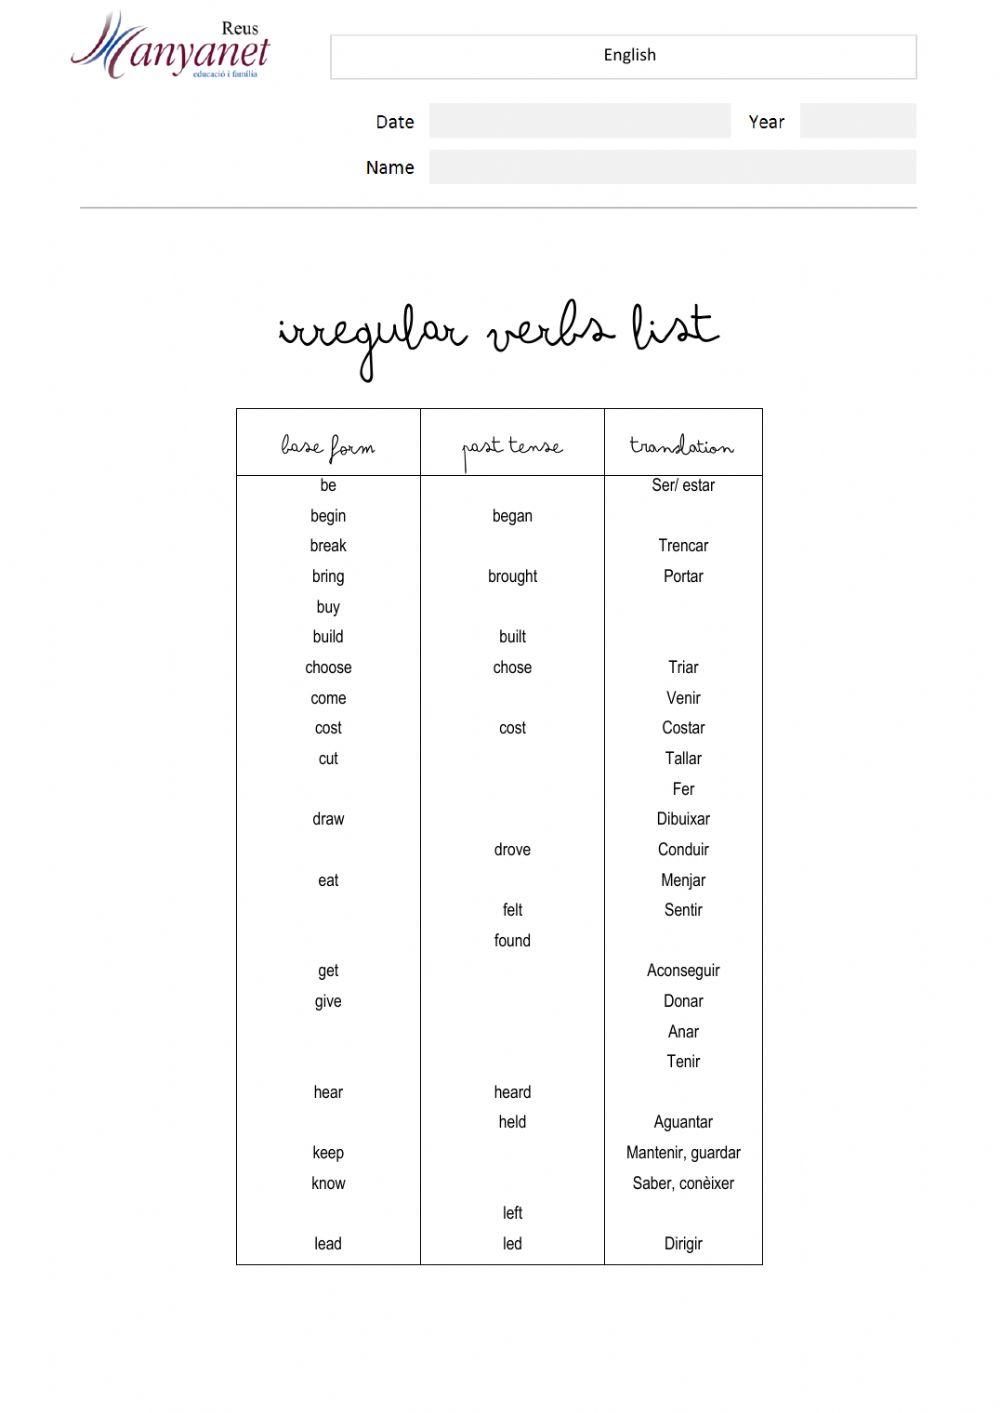 Irregular verbs test 1